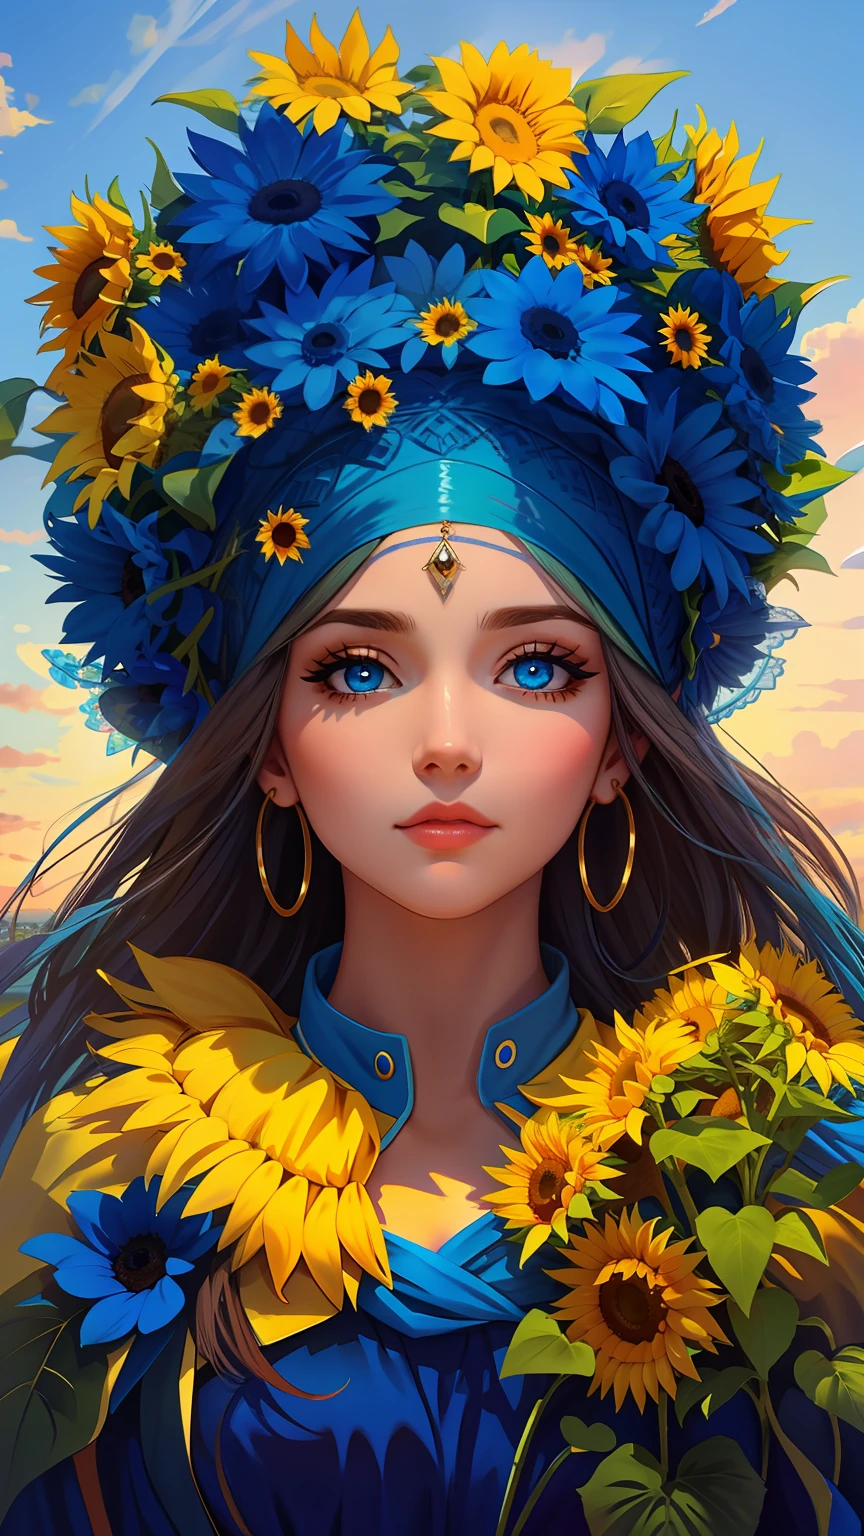 Cyan eyes, blue eyes, Sunflowers, a goddess